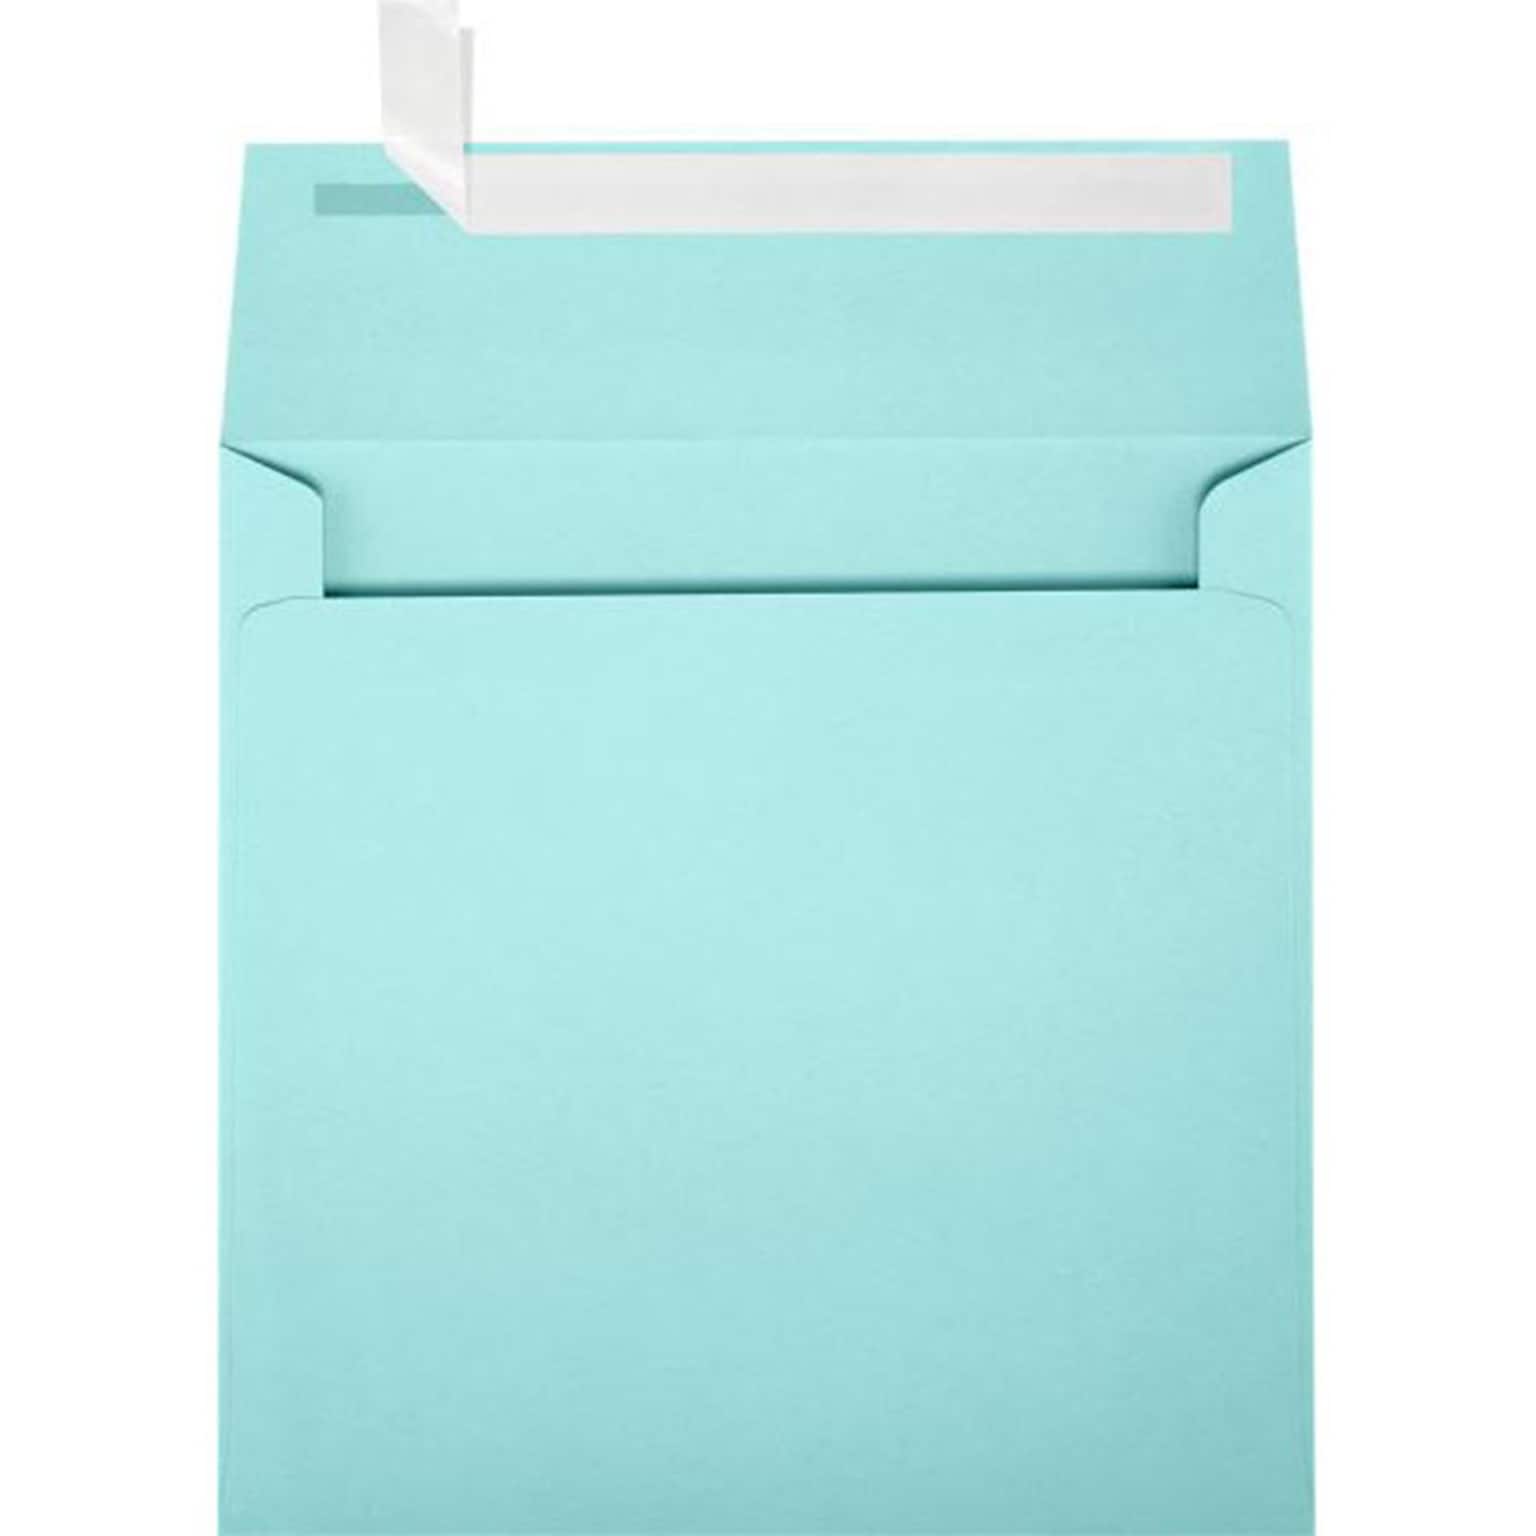 JAM Paper Self Seal Invitation Envelopes, 5 1/4 x 5 1/4, Seafoam Green, 500/Pack (8510-113-500)